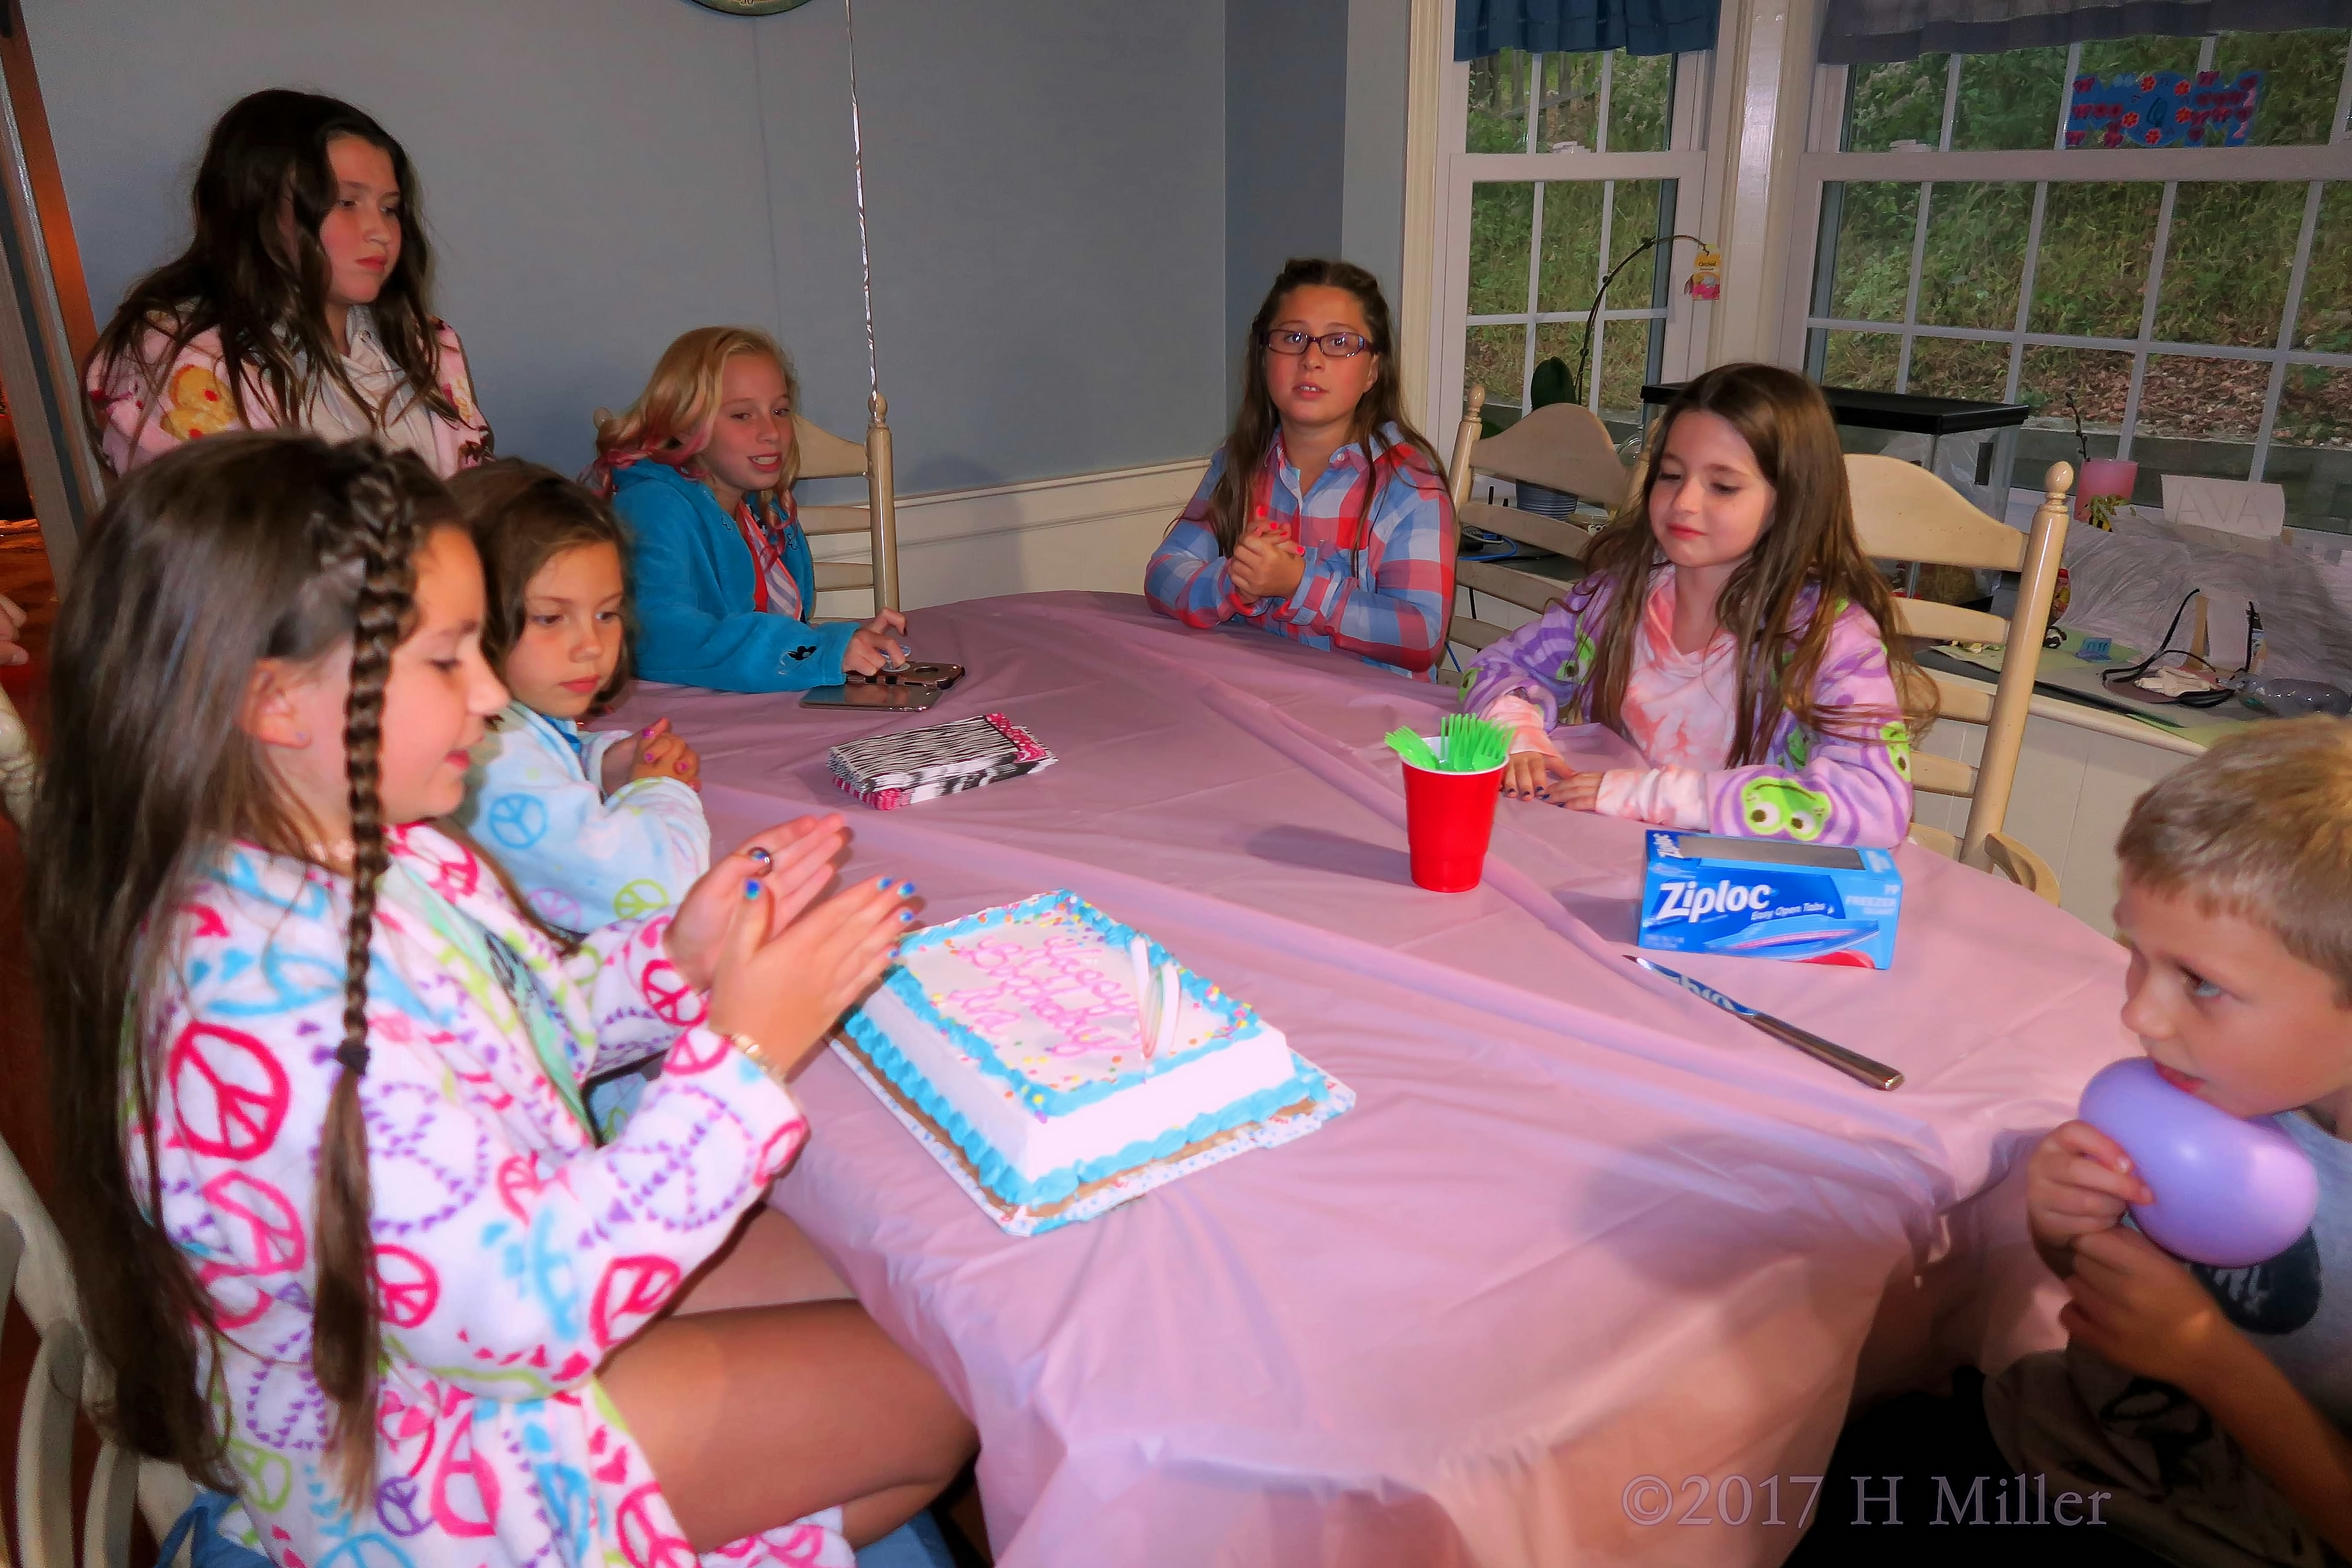 The Girls Are Gathered Around The Birthday Cake Table 